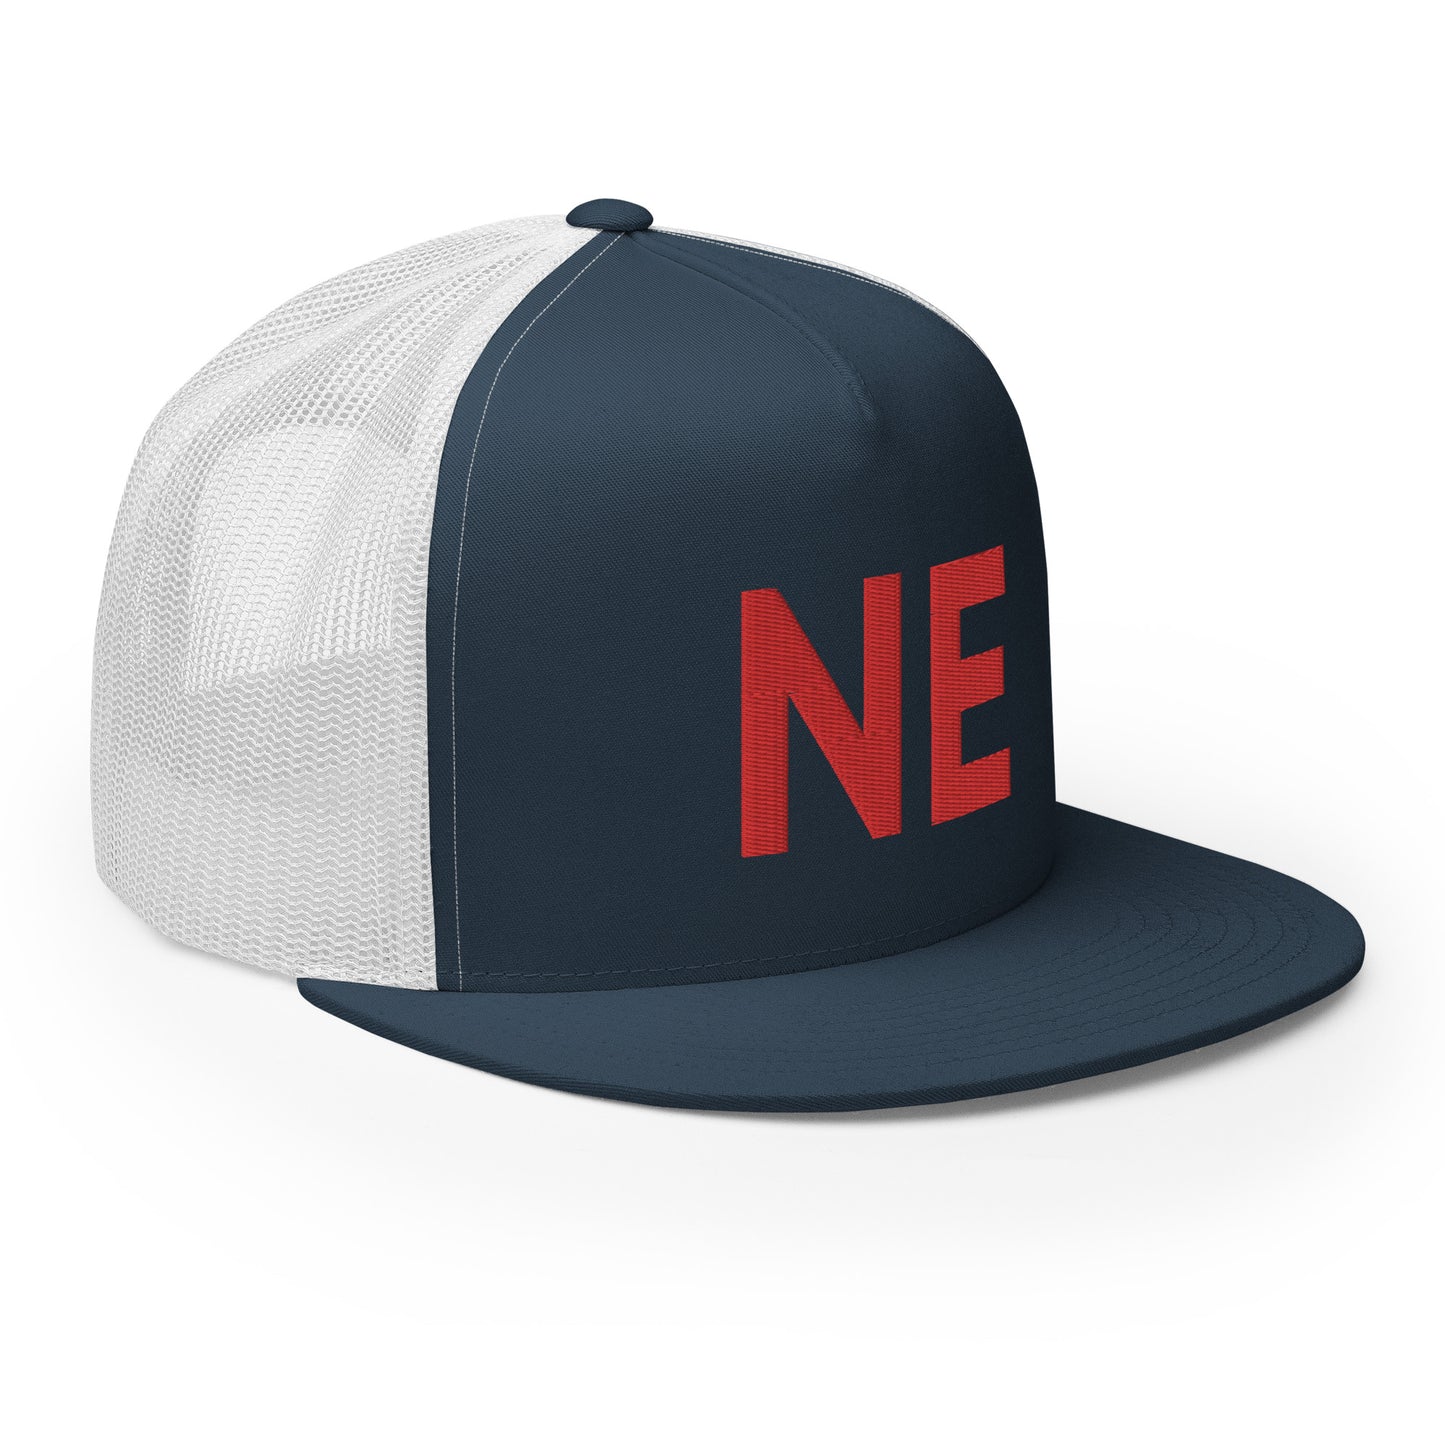 NE New England Nation Trucker Hat